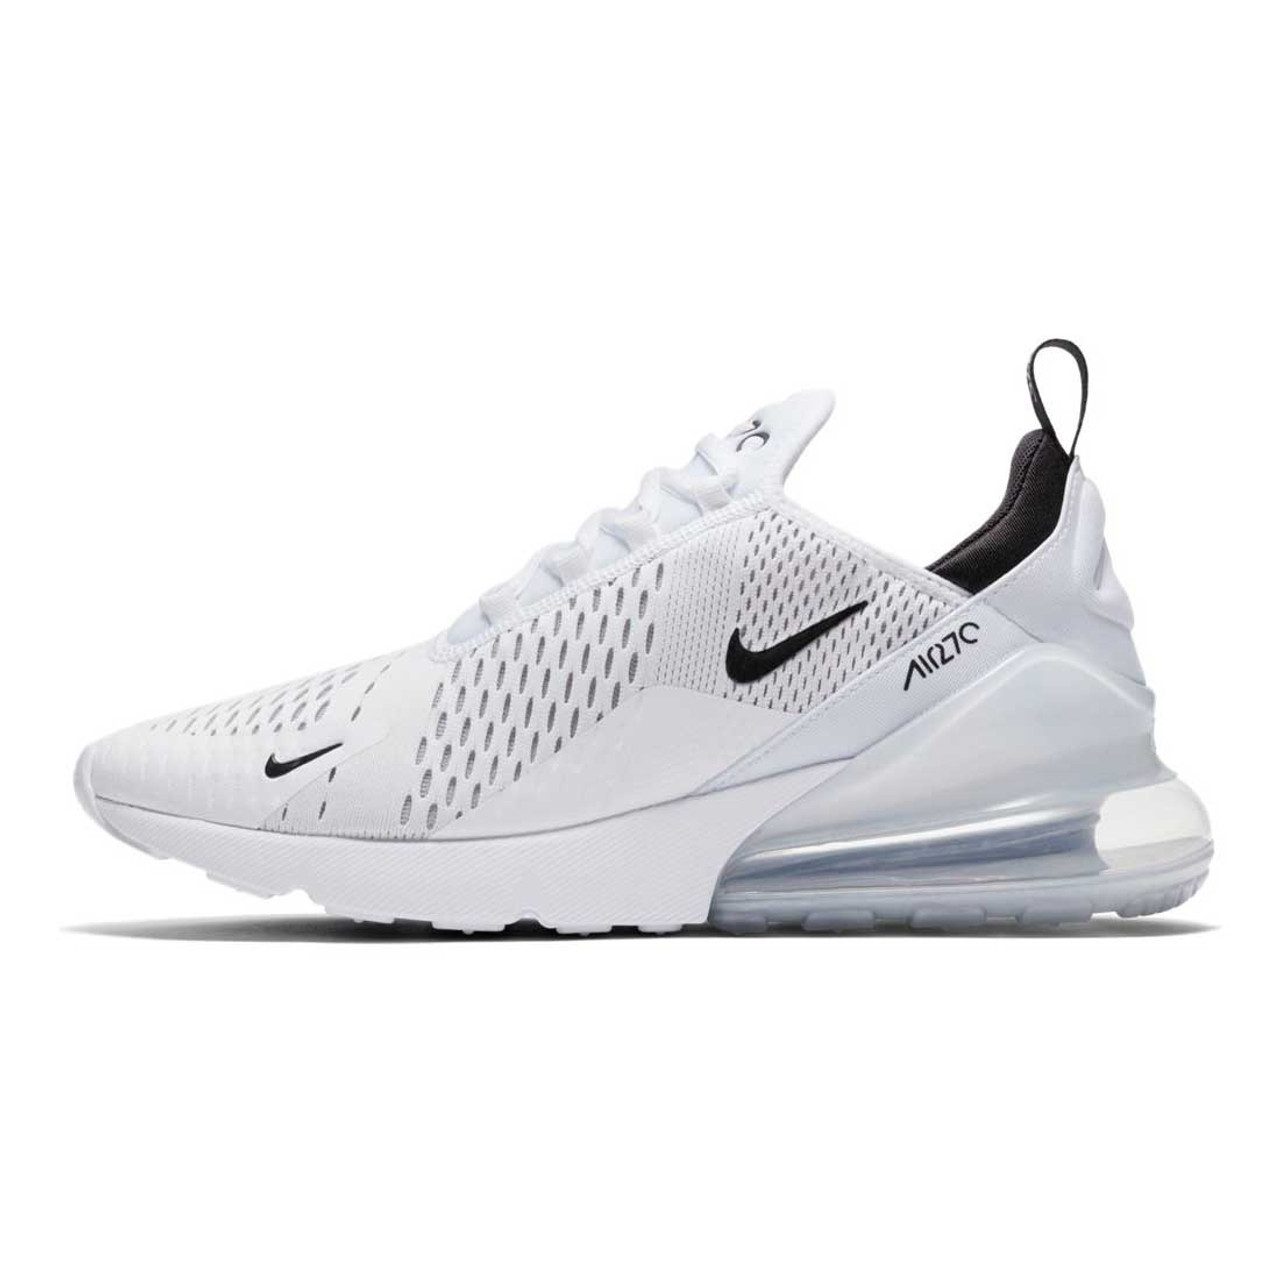 Nike Mens Air Max 270 - Mens Running Shoes White/Black/White Size 10.5